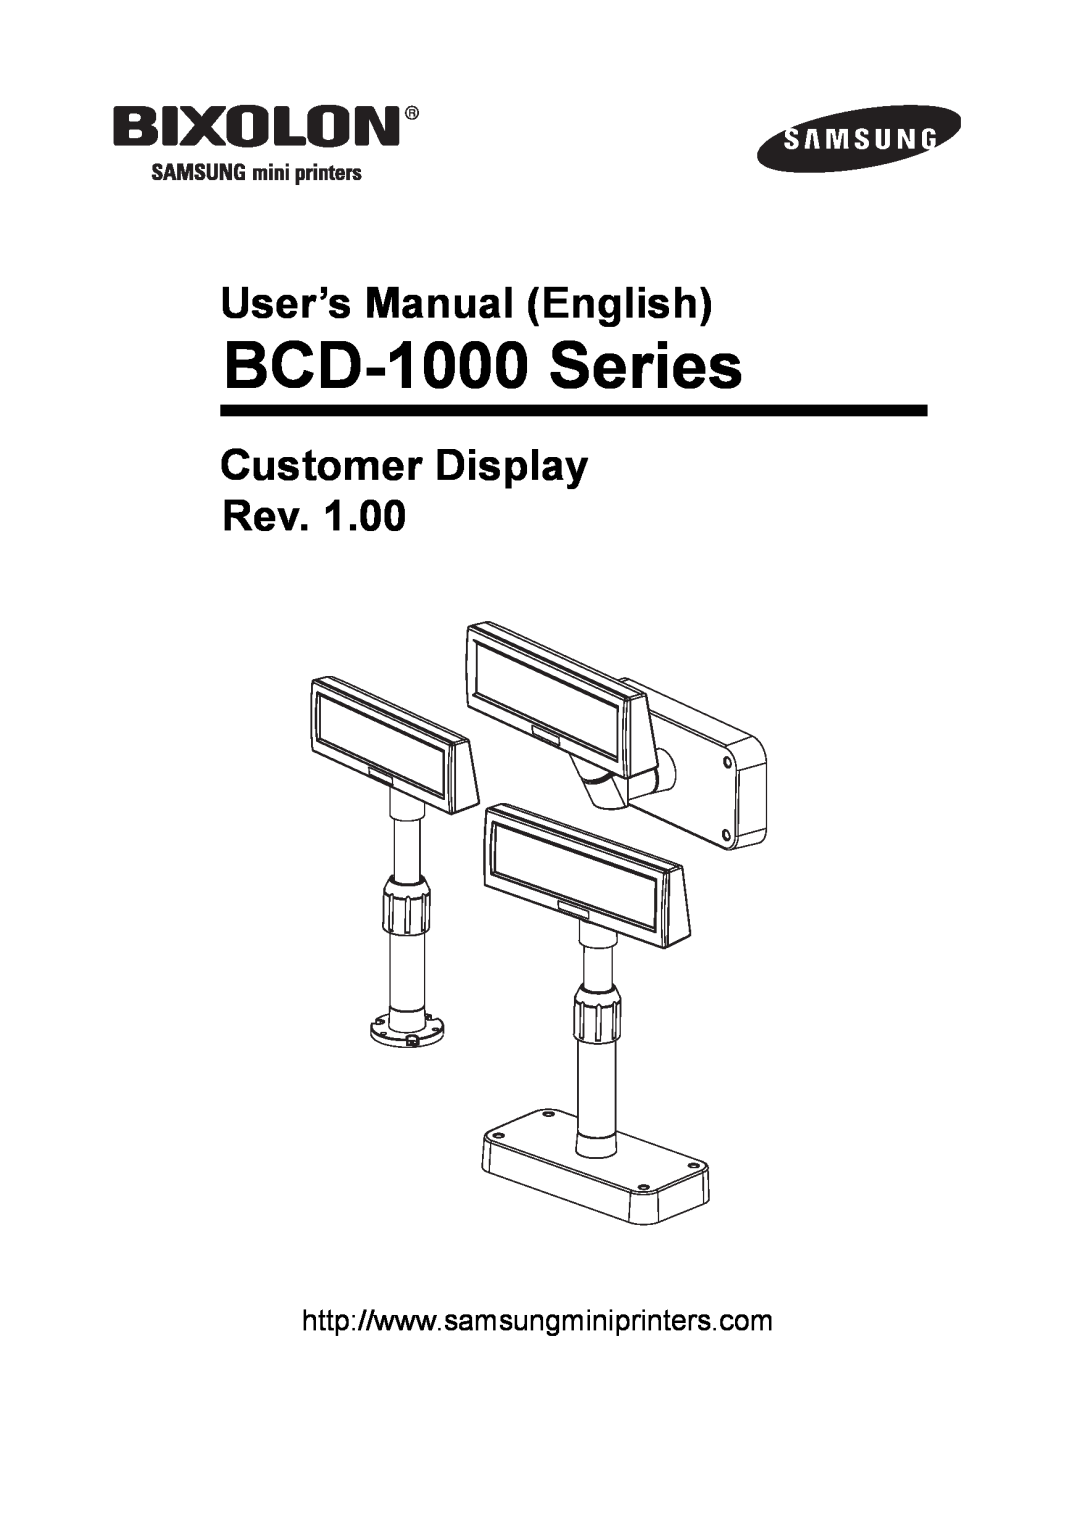 Samsung user manual User’s Manual English, Customer Display Rev, BCD-1000 Series 